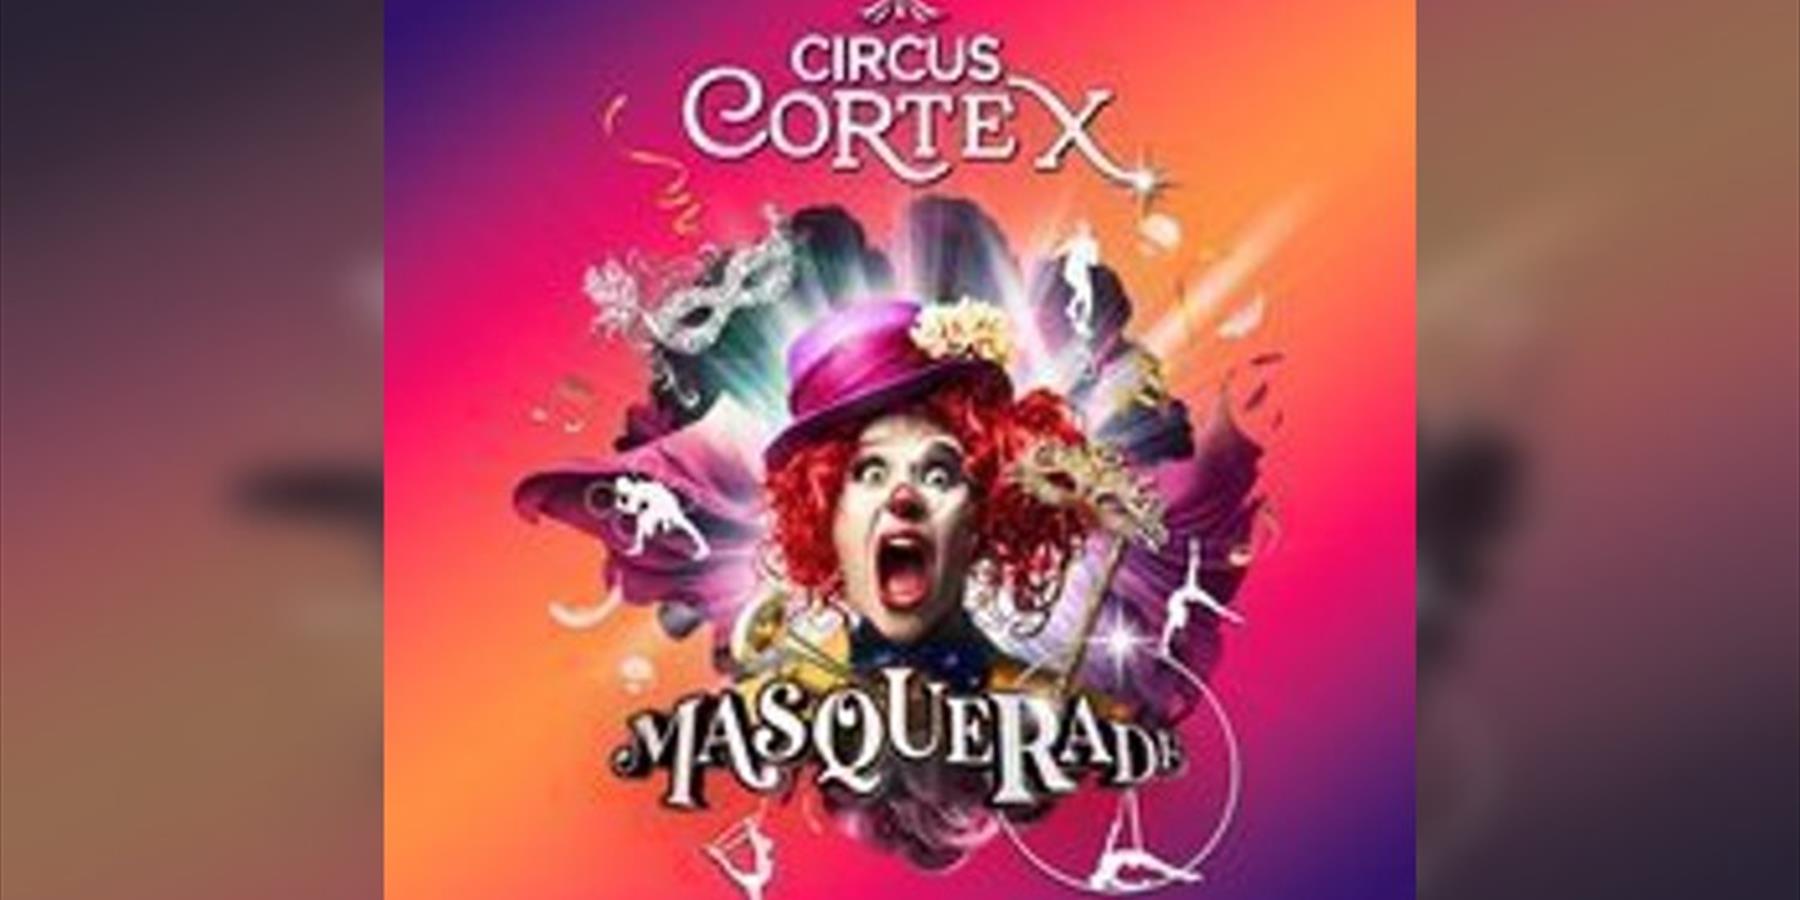 Circus Cortex at Leicester